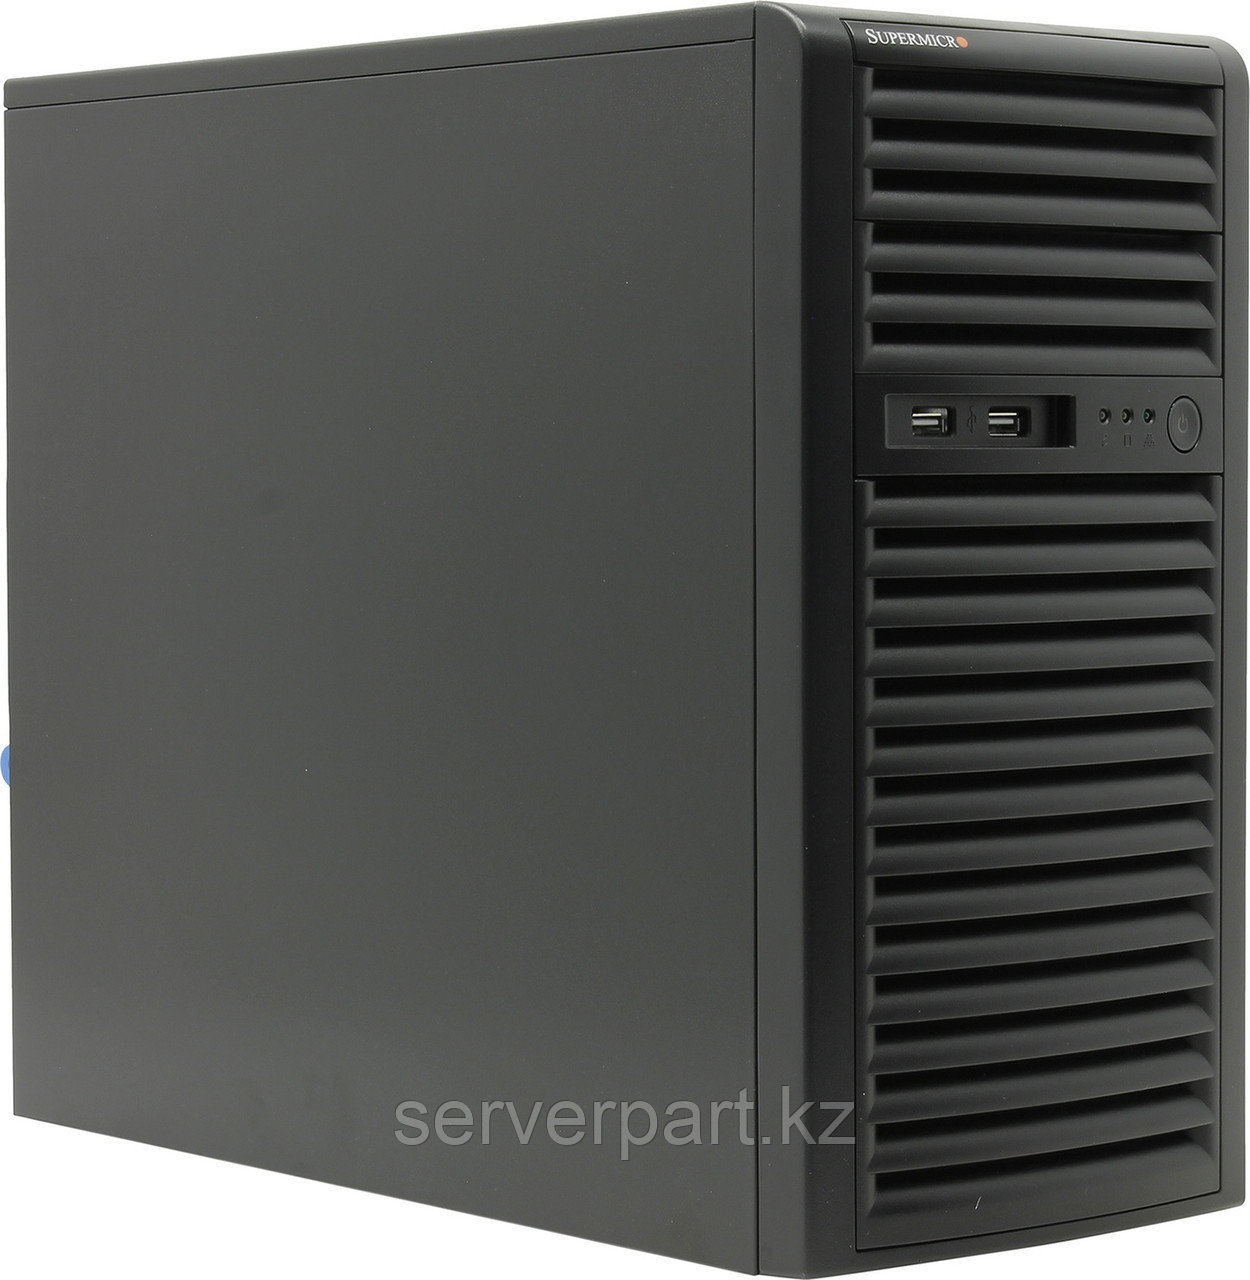 Сервер Supermicro SYS-5039C Tower 4LFF/4-core intel xeon E2124 3.3GHz/48GB EUDIMM/1x480GB SSD DT Hyb, фото 1